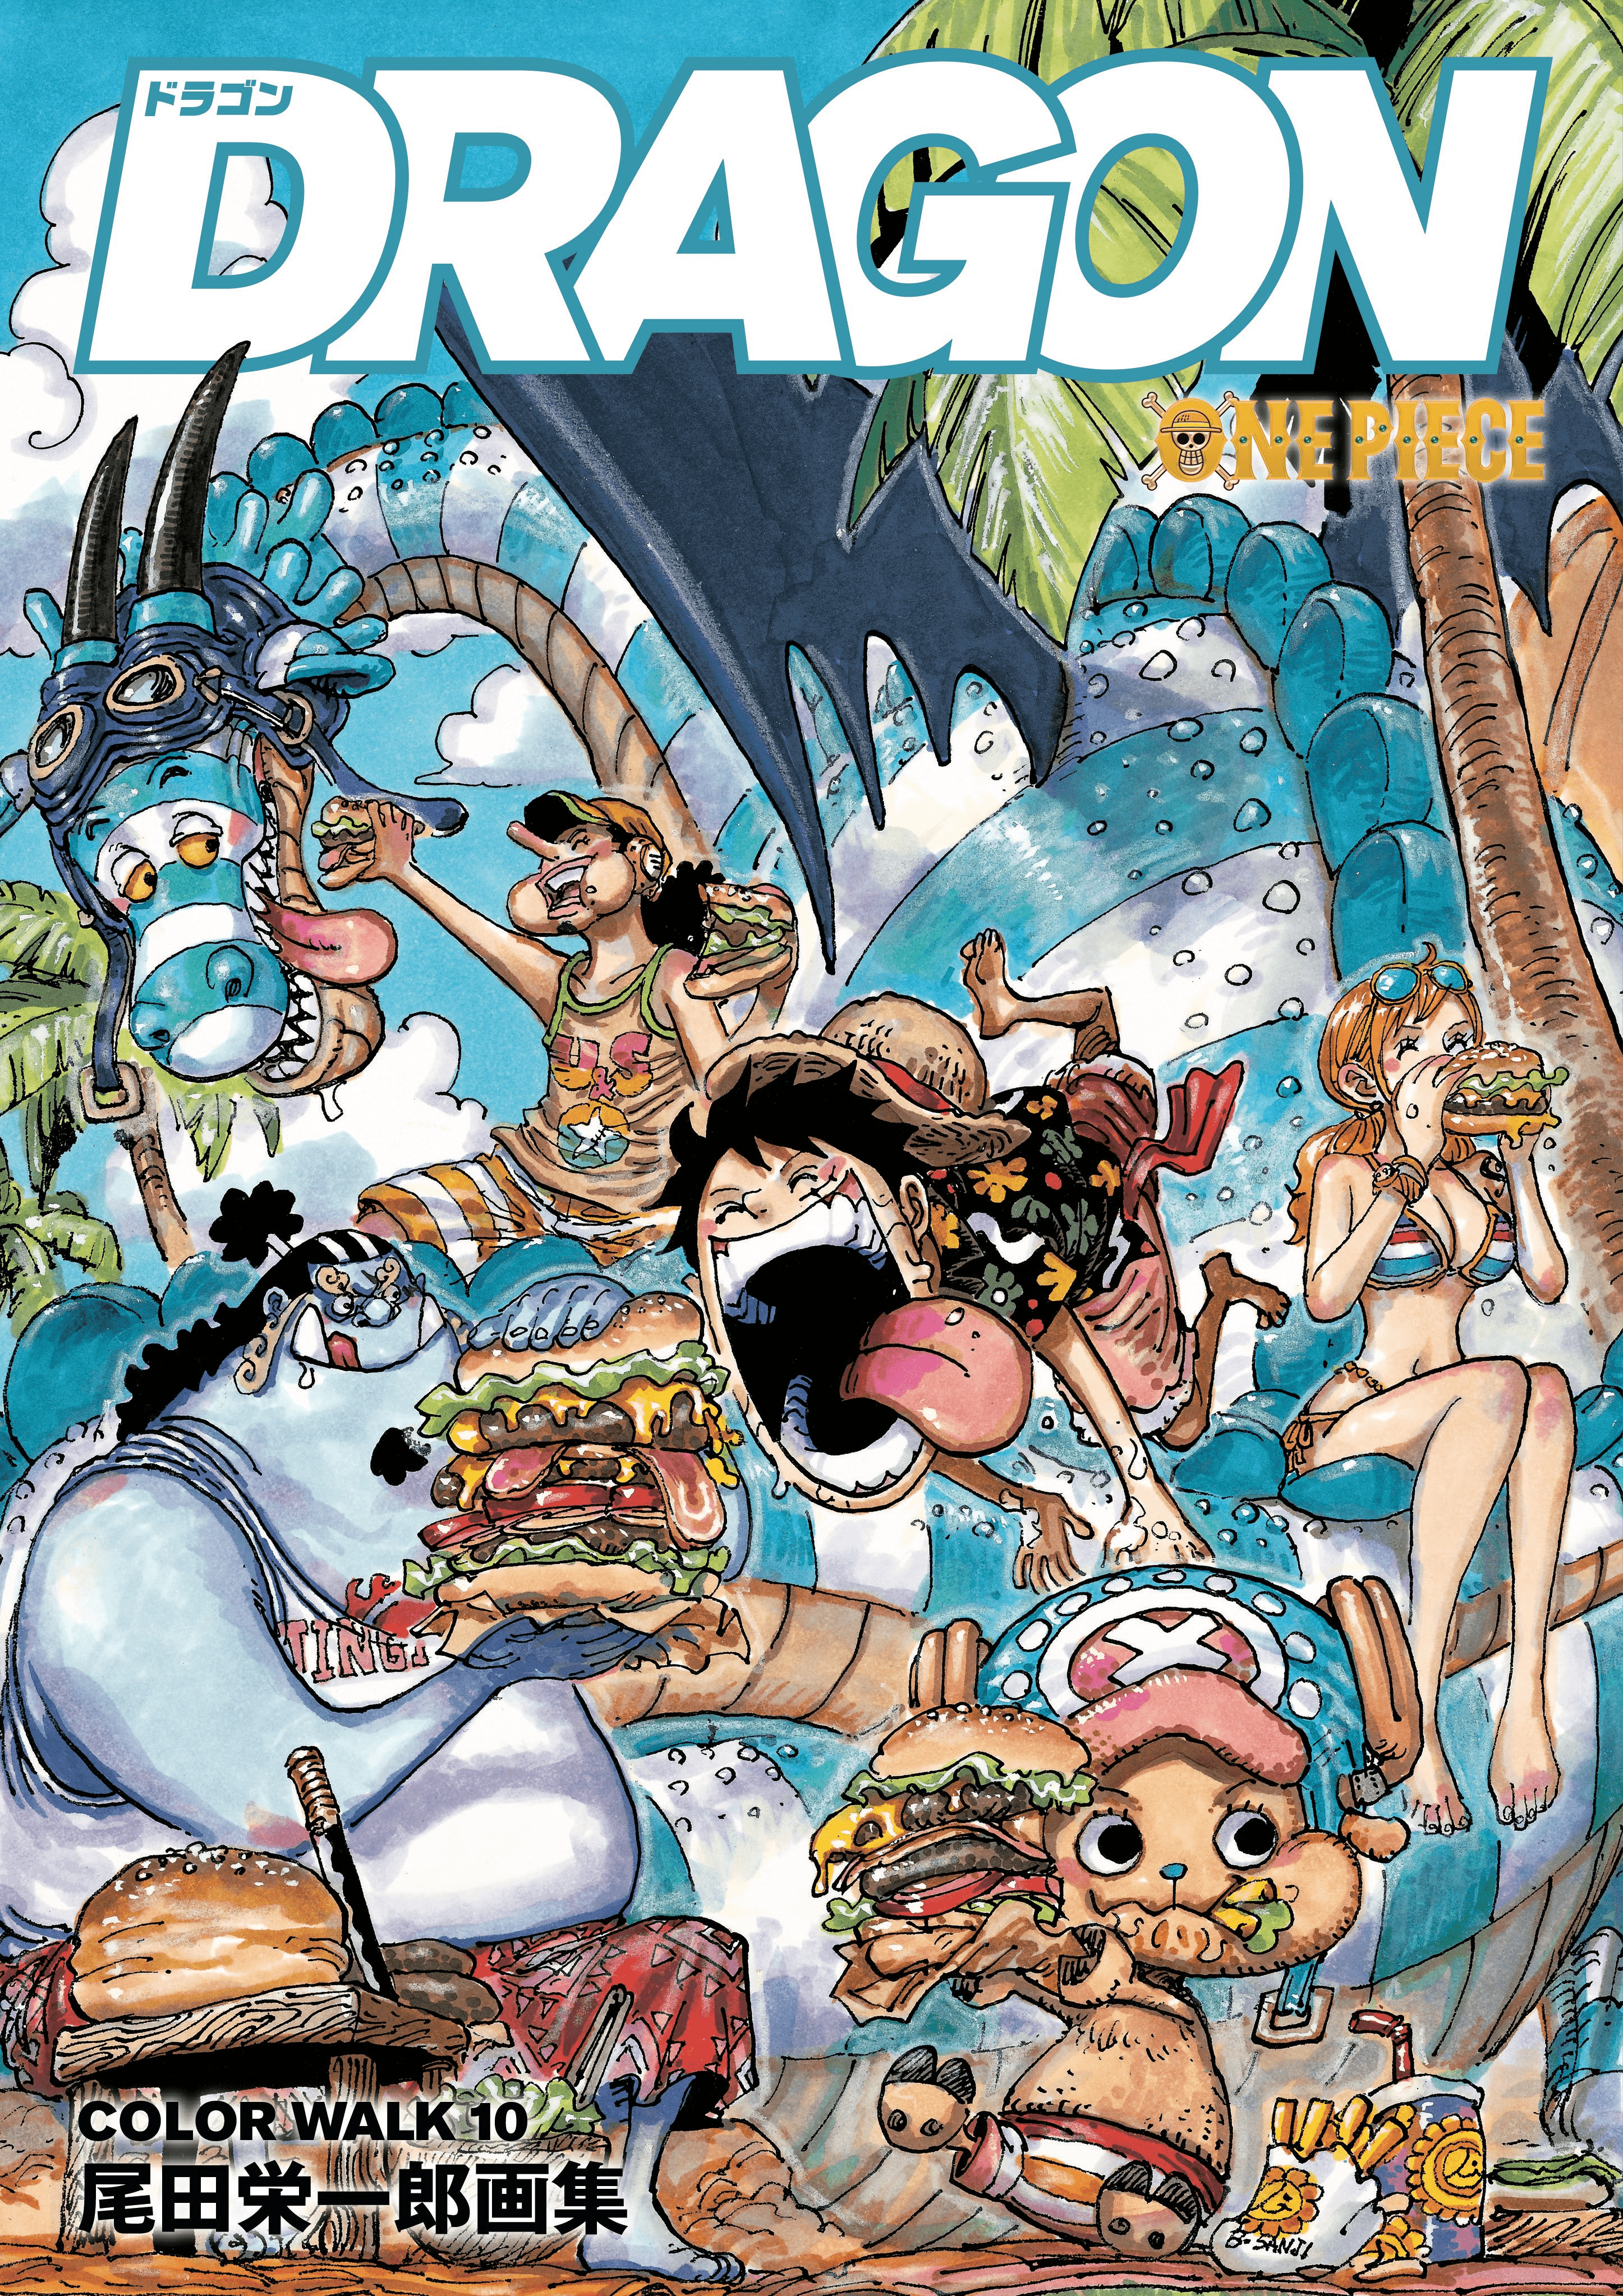 Eiichiro Oda: One Piece Film: Gold episode 0 711 ver. Booklet - JAPAN  Release